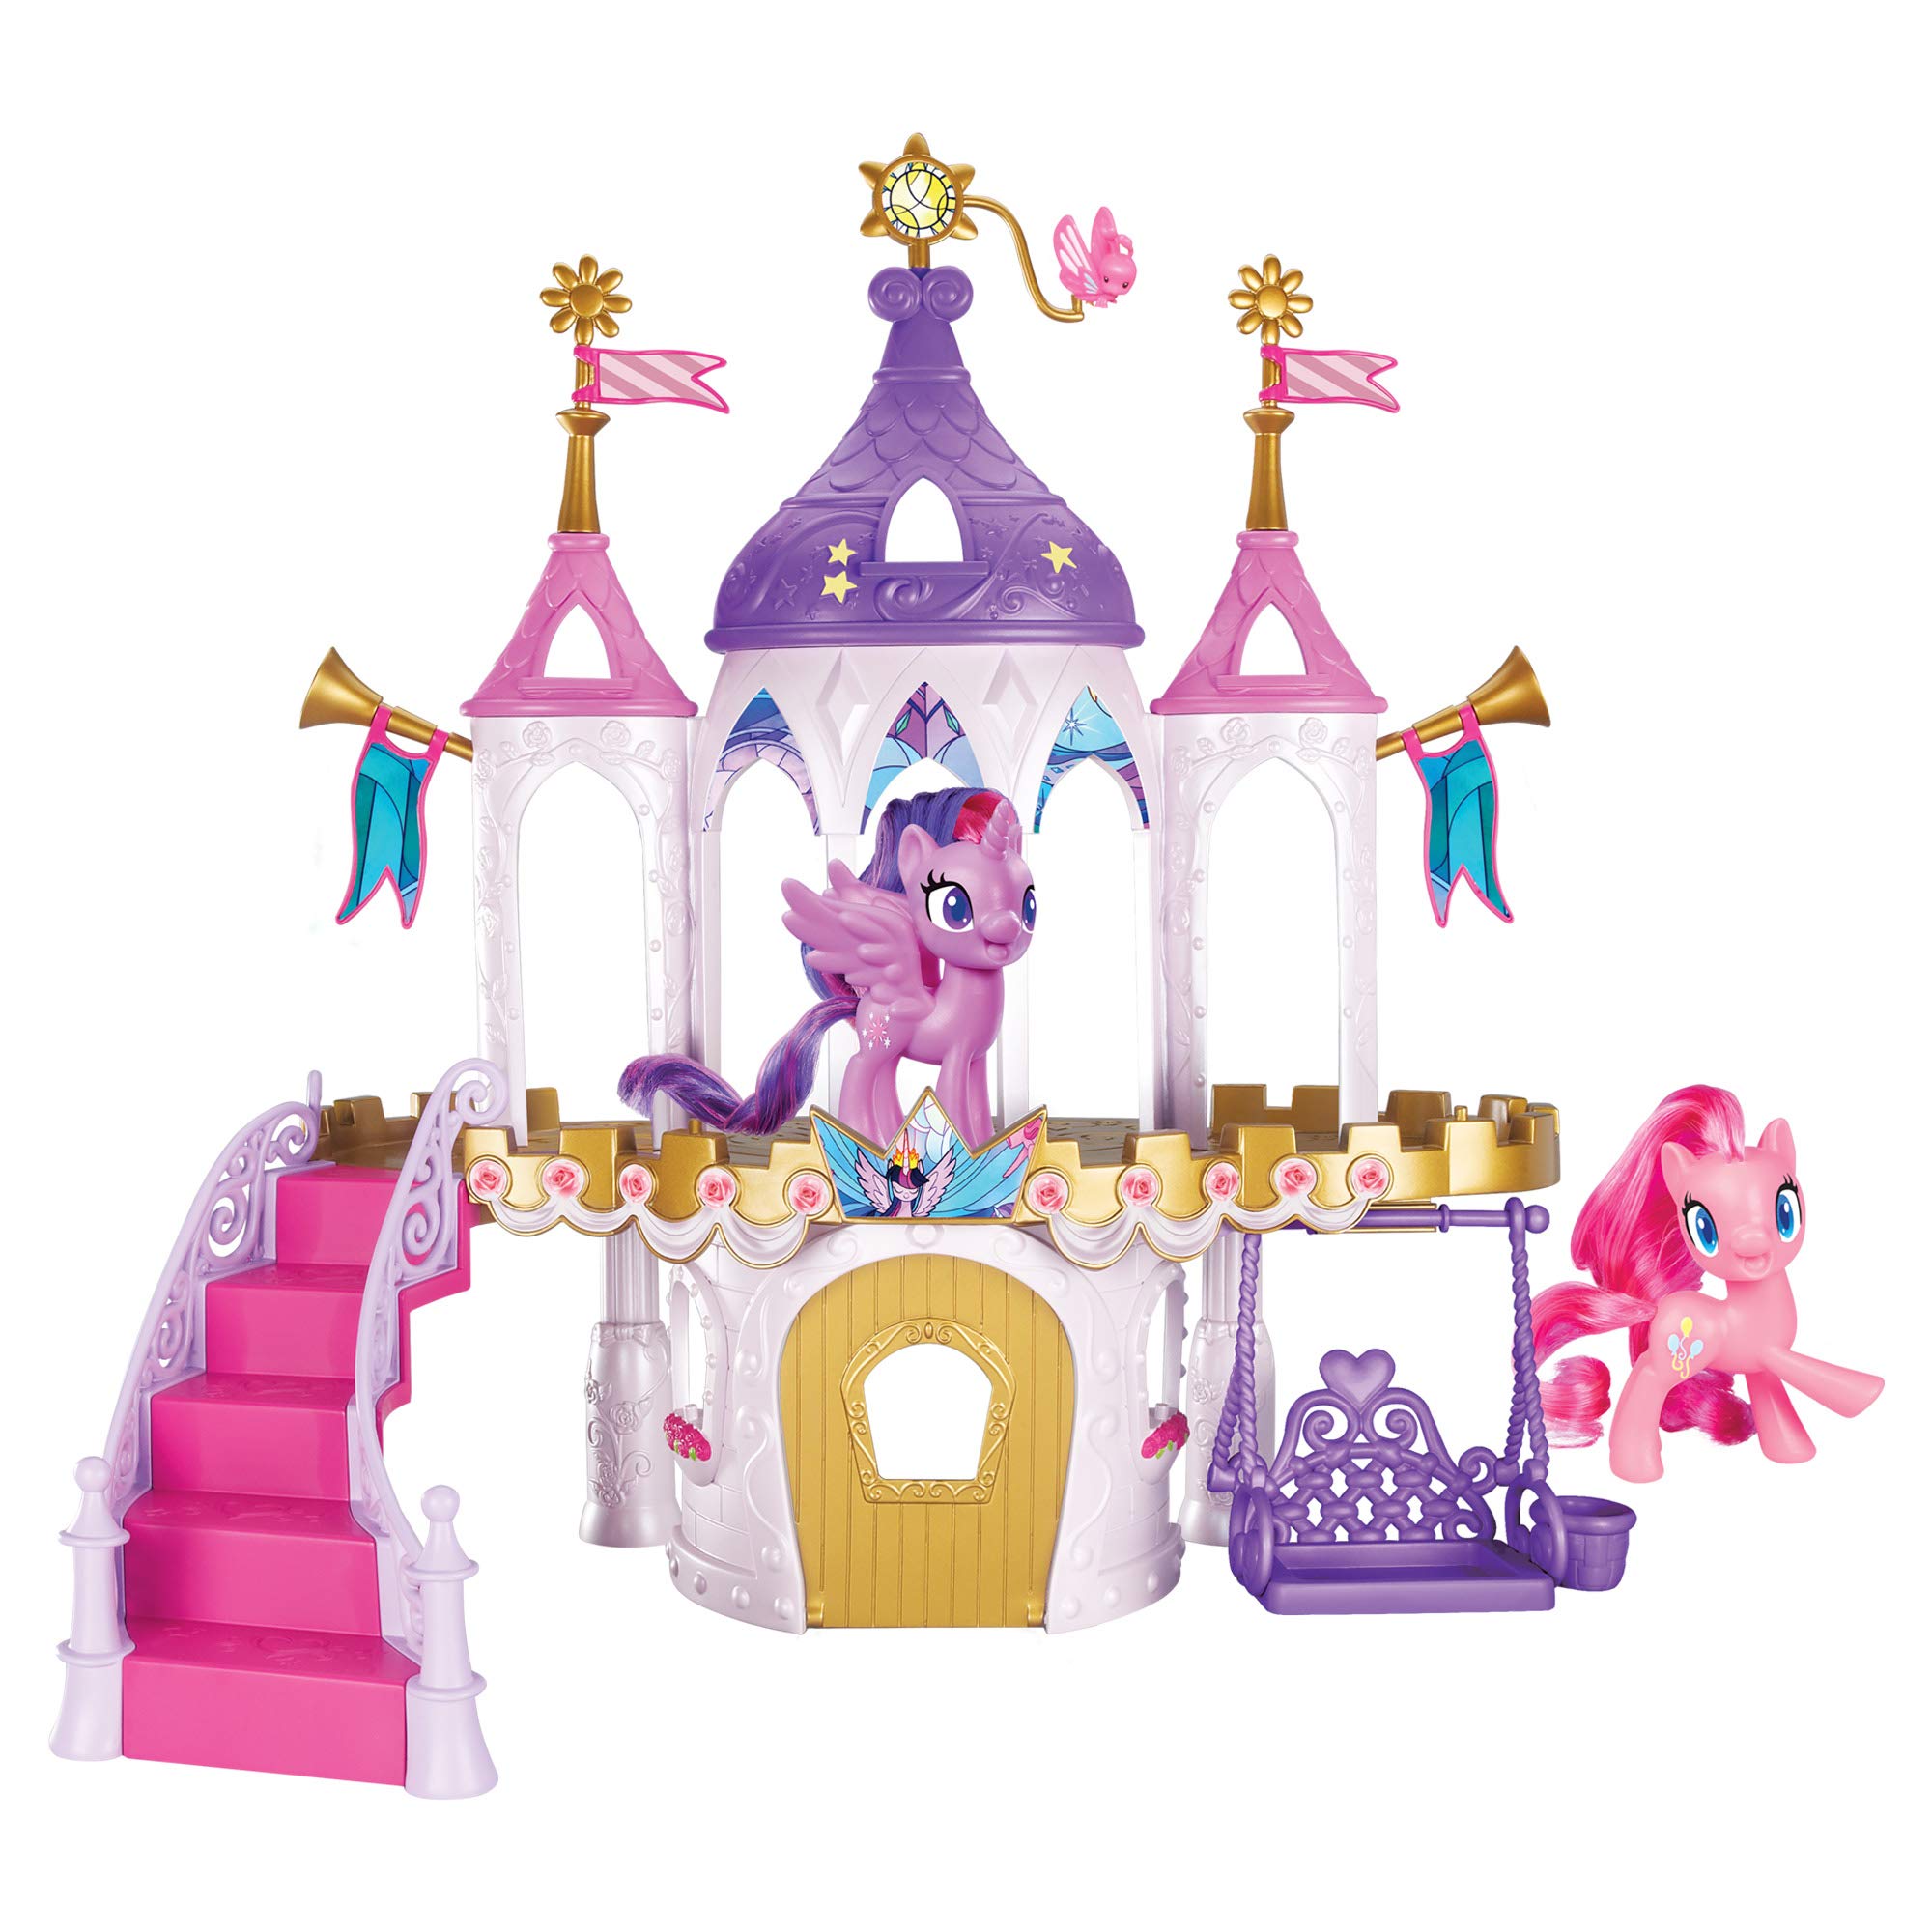 Share 48 kuva my little pony twilight sparkle castle toy